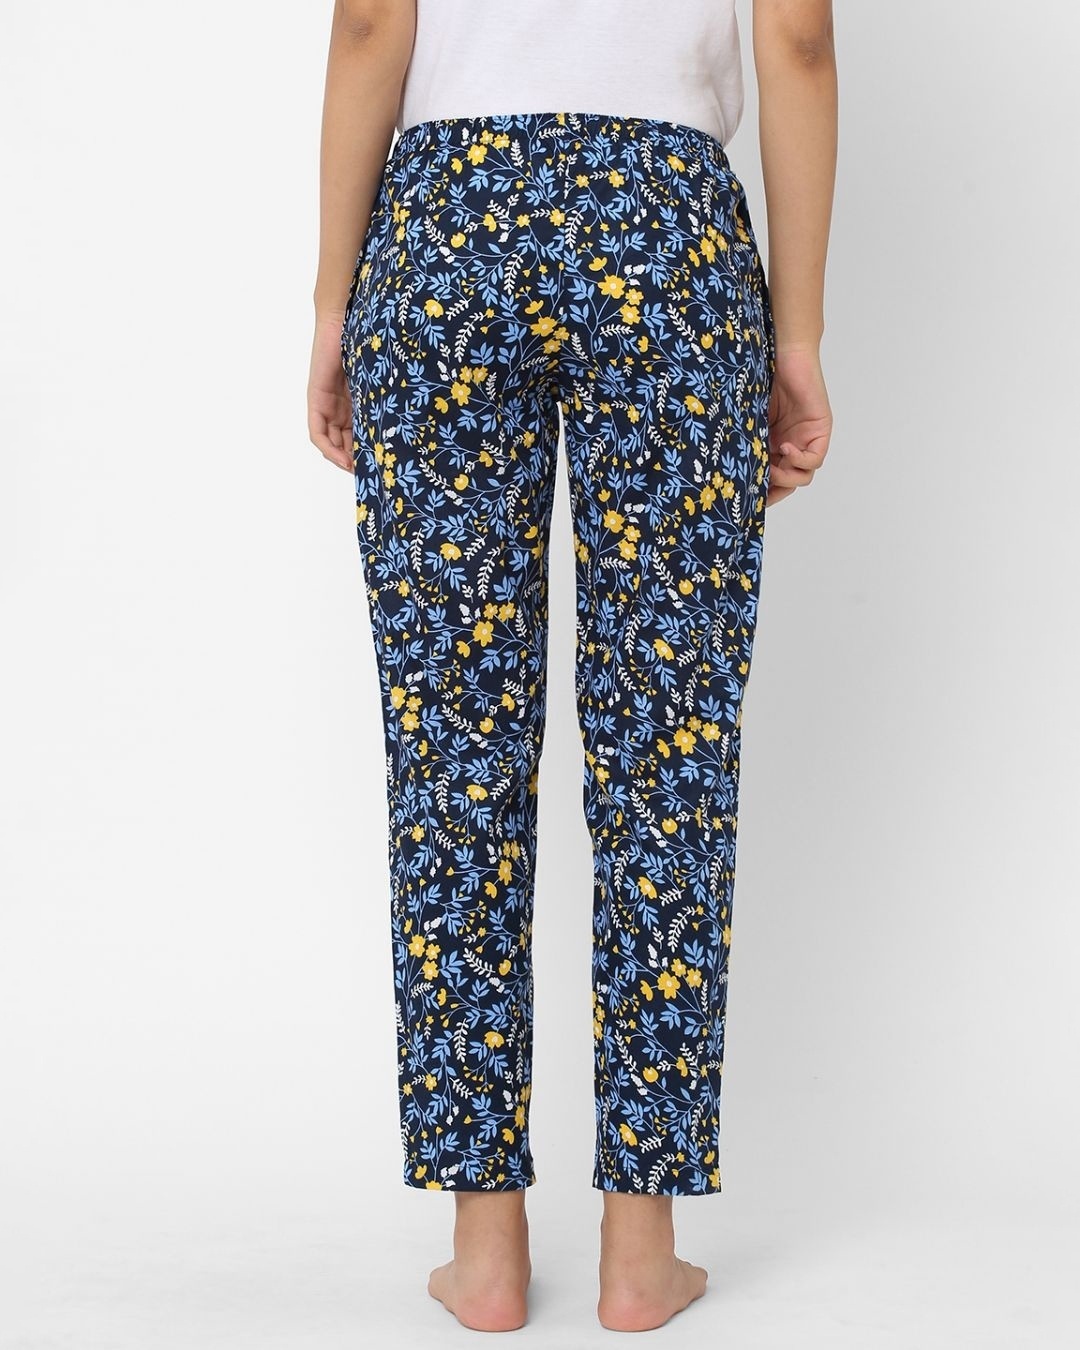 Shop Women's Blue All Over Floral Printed Cotton Lounge Pants-Design